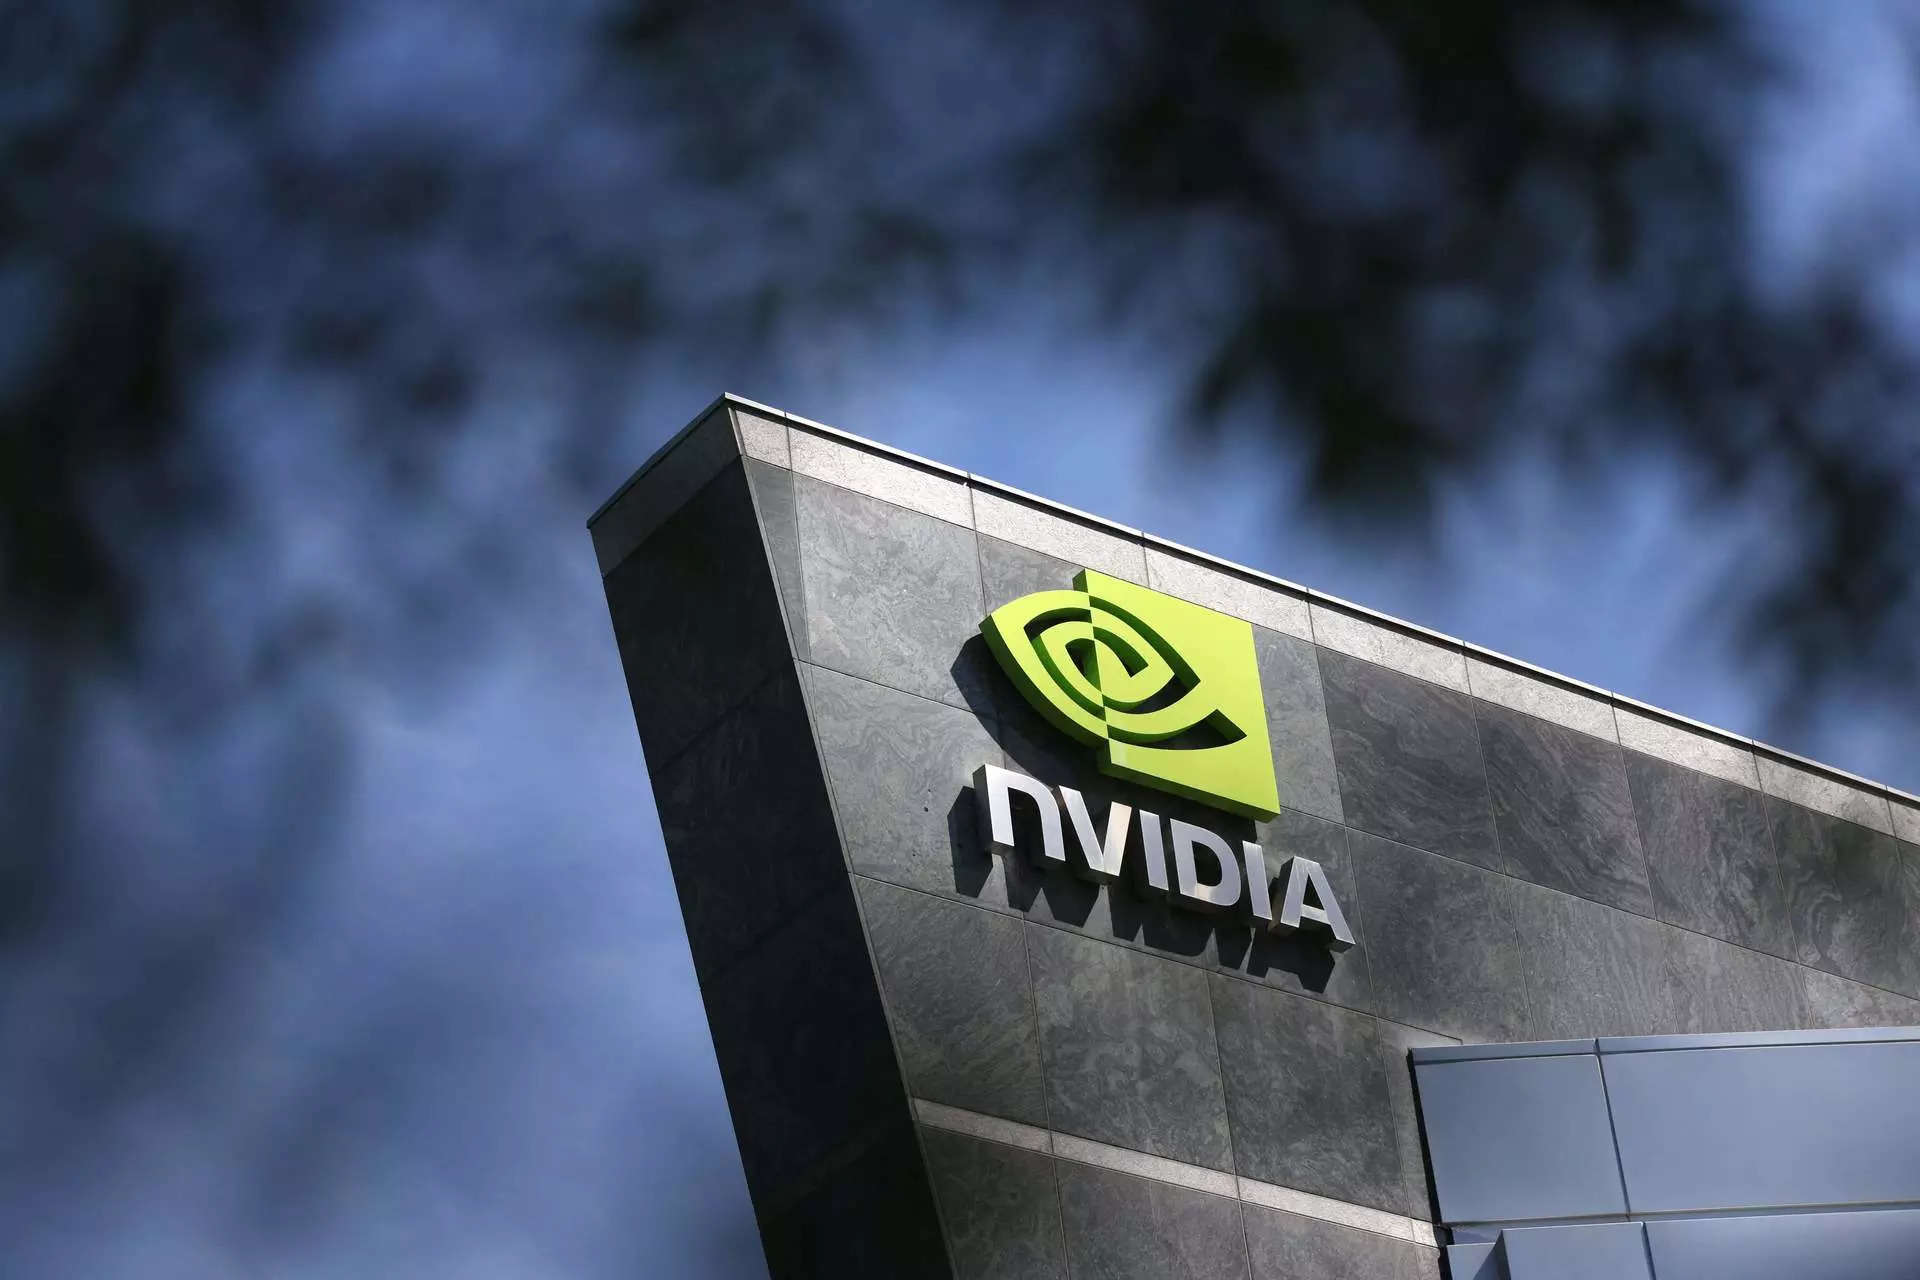 Nvidia drops from record high, tracking market fall; AI bets